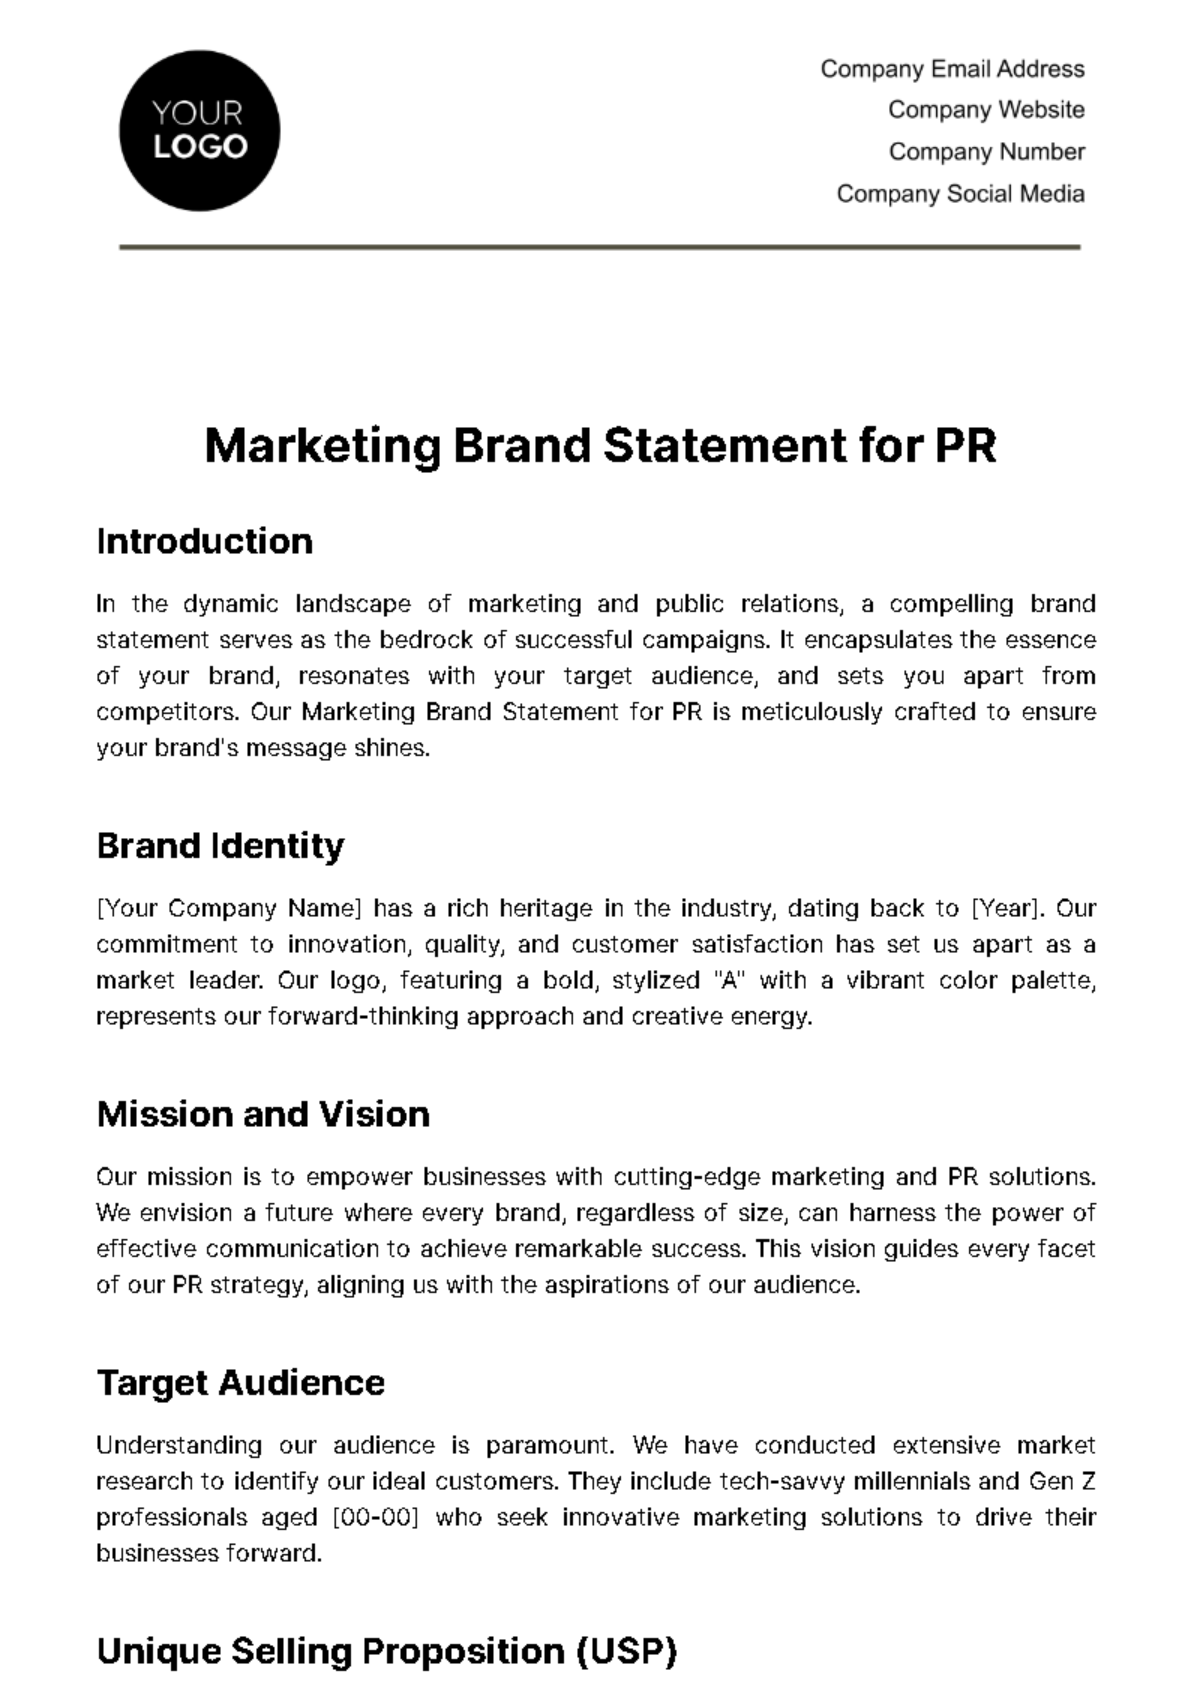 Marketing Brand Statement for PR Template